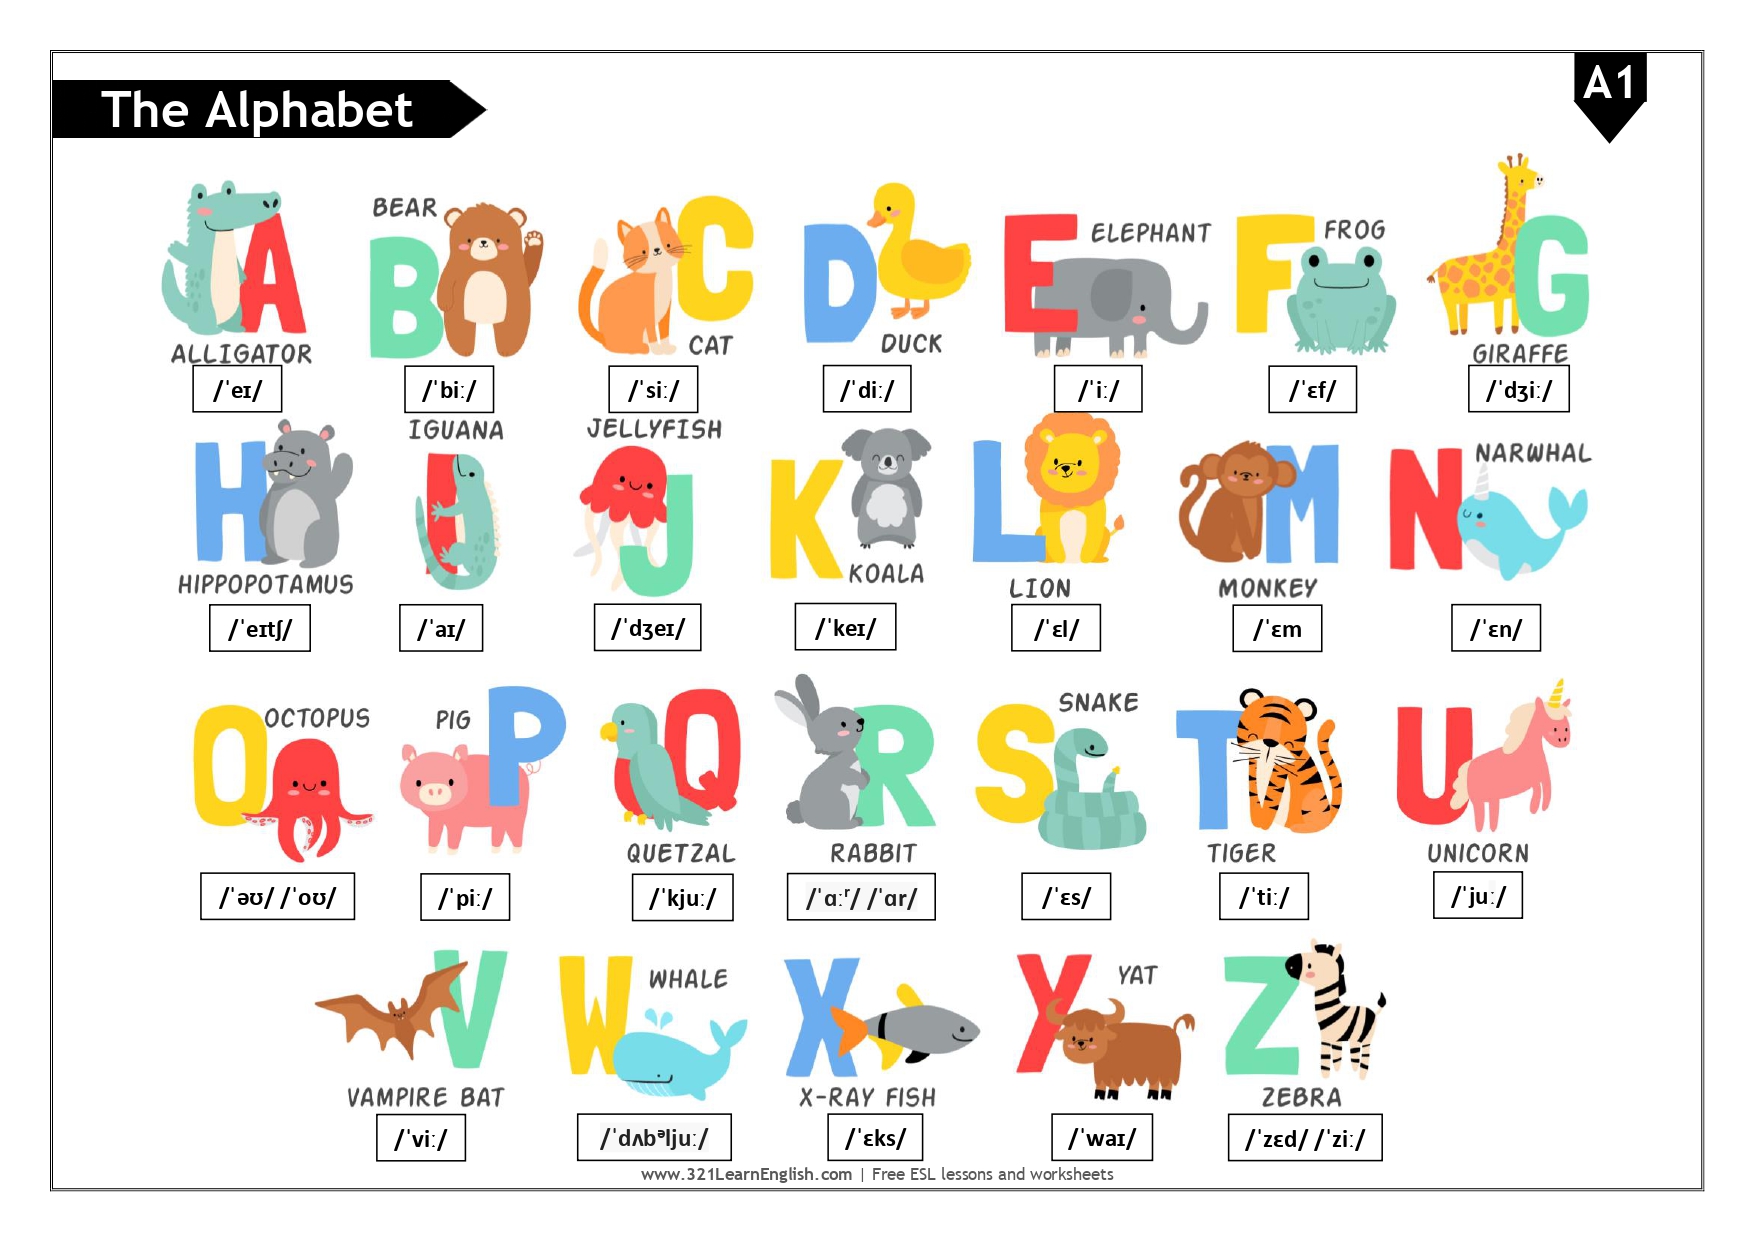 321 Learn English.com: Phonetics: The English Alphabet (Level: A1)